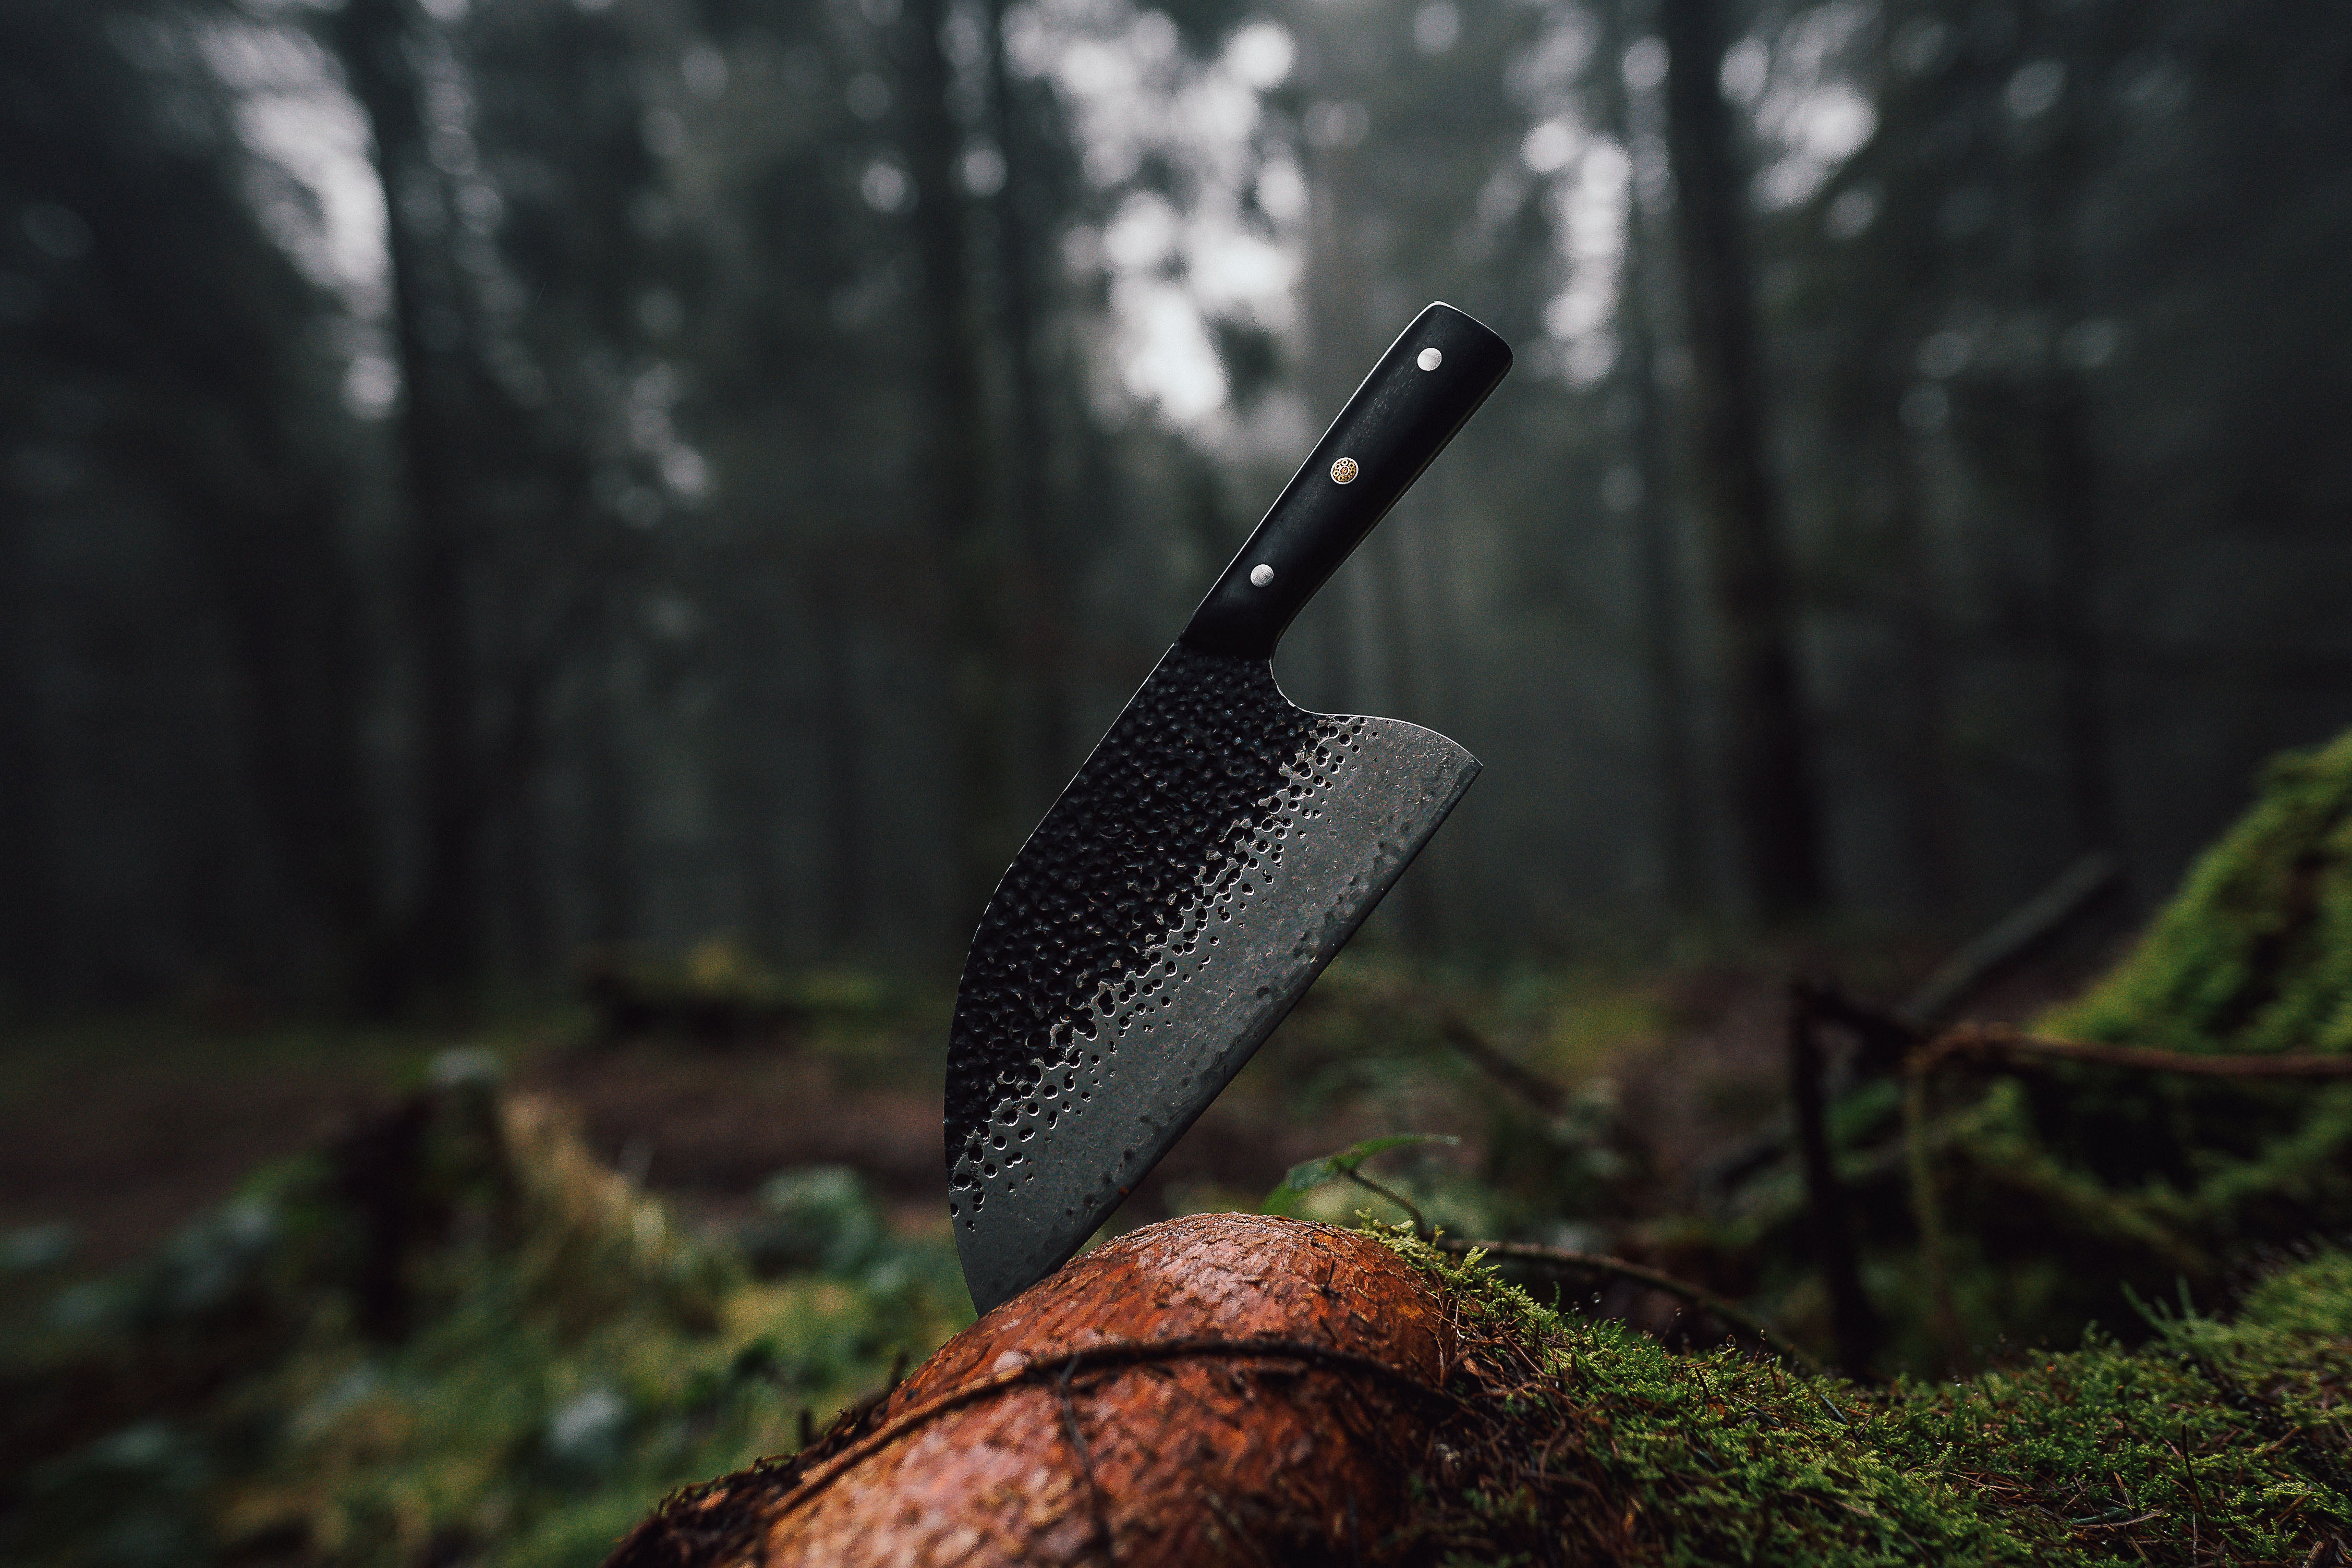 Pinnacle of Professional Knife Sharpening - Knife Merchant 